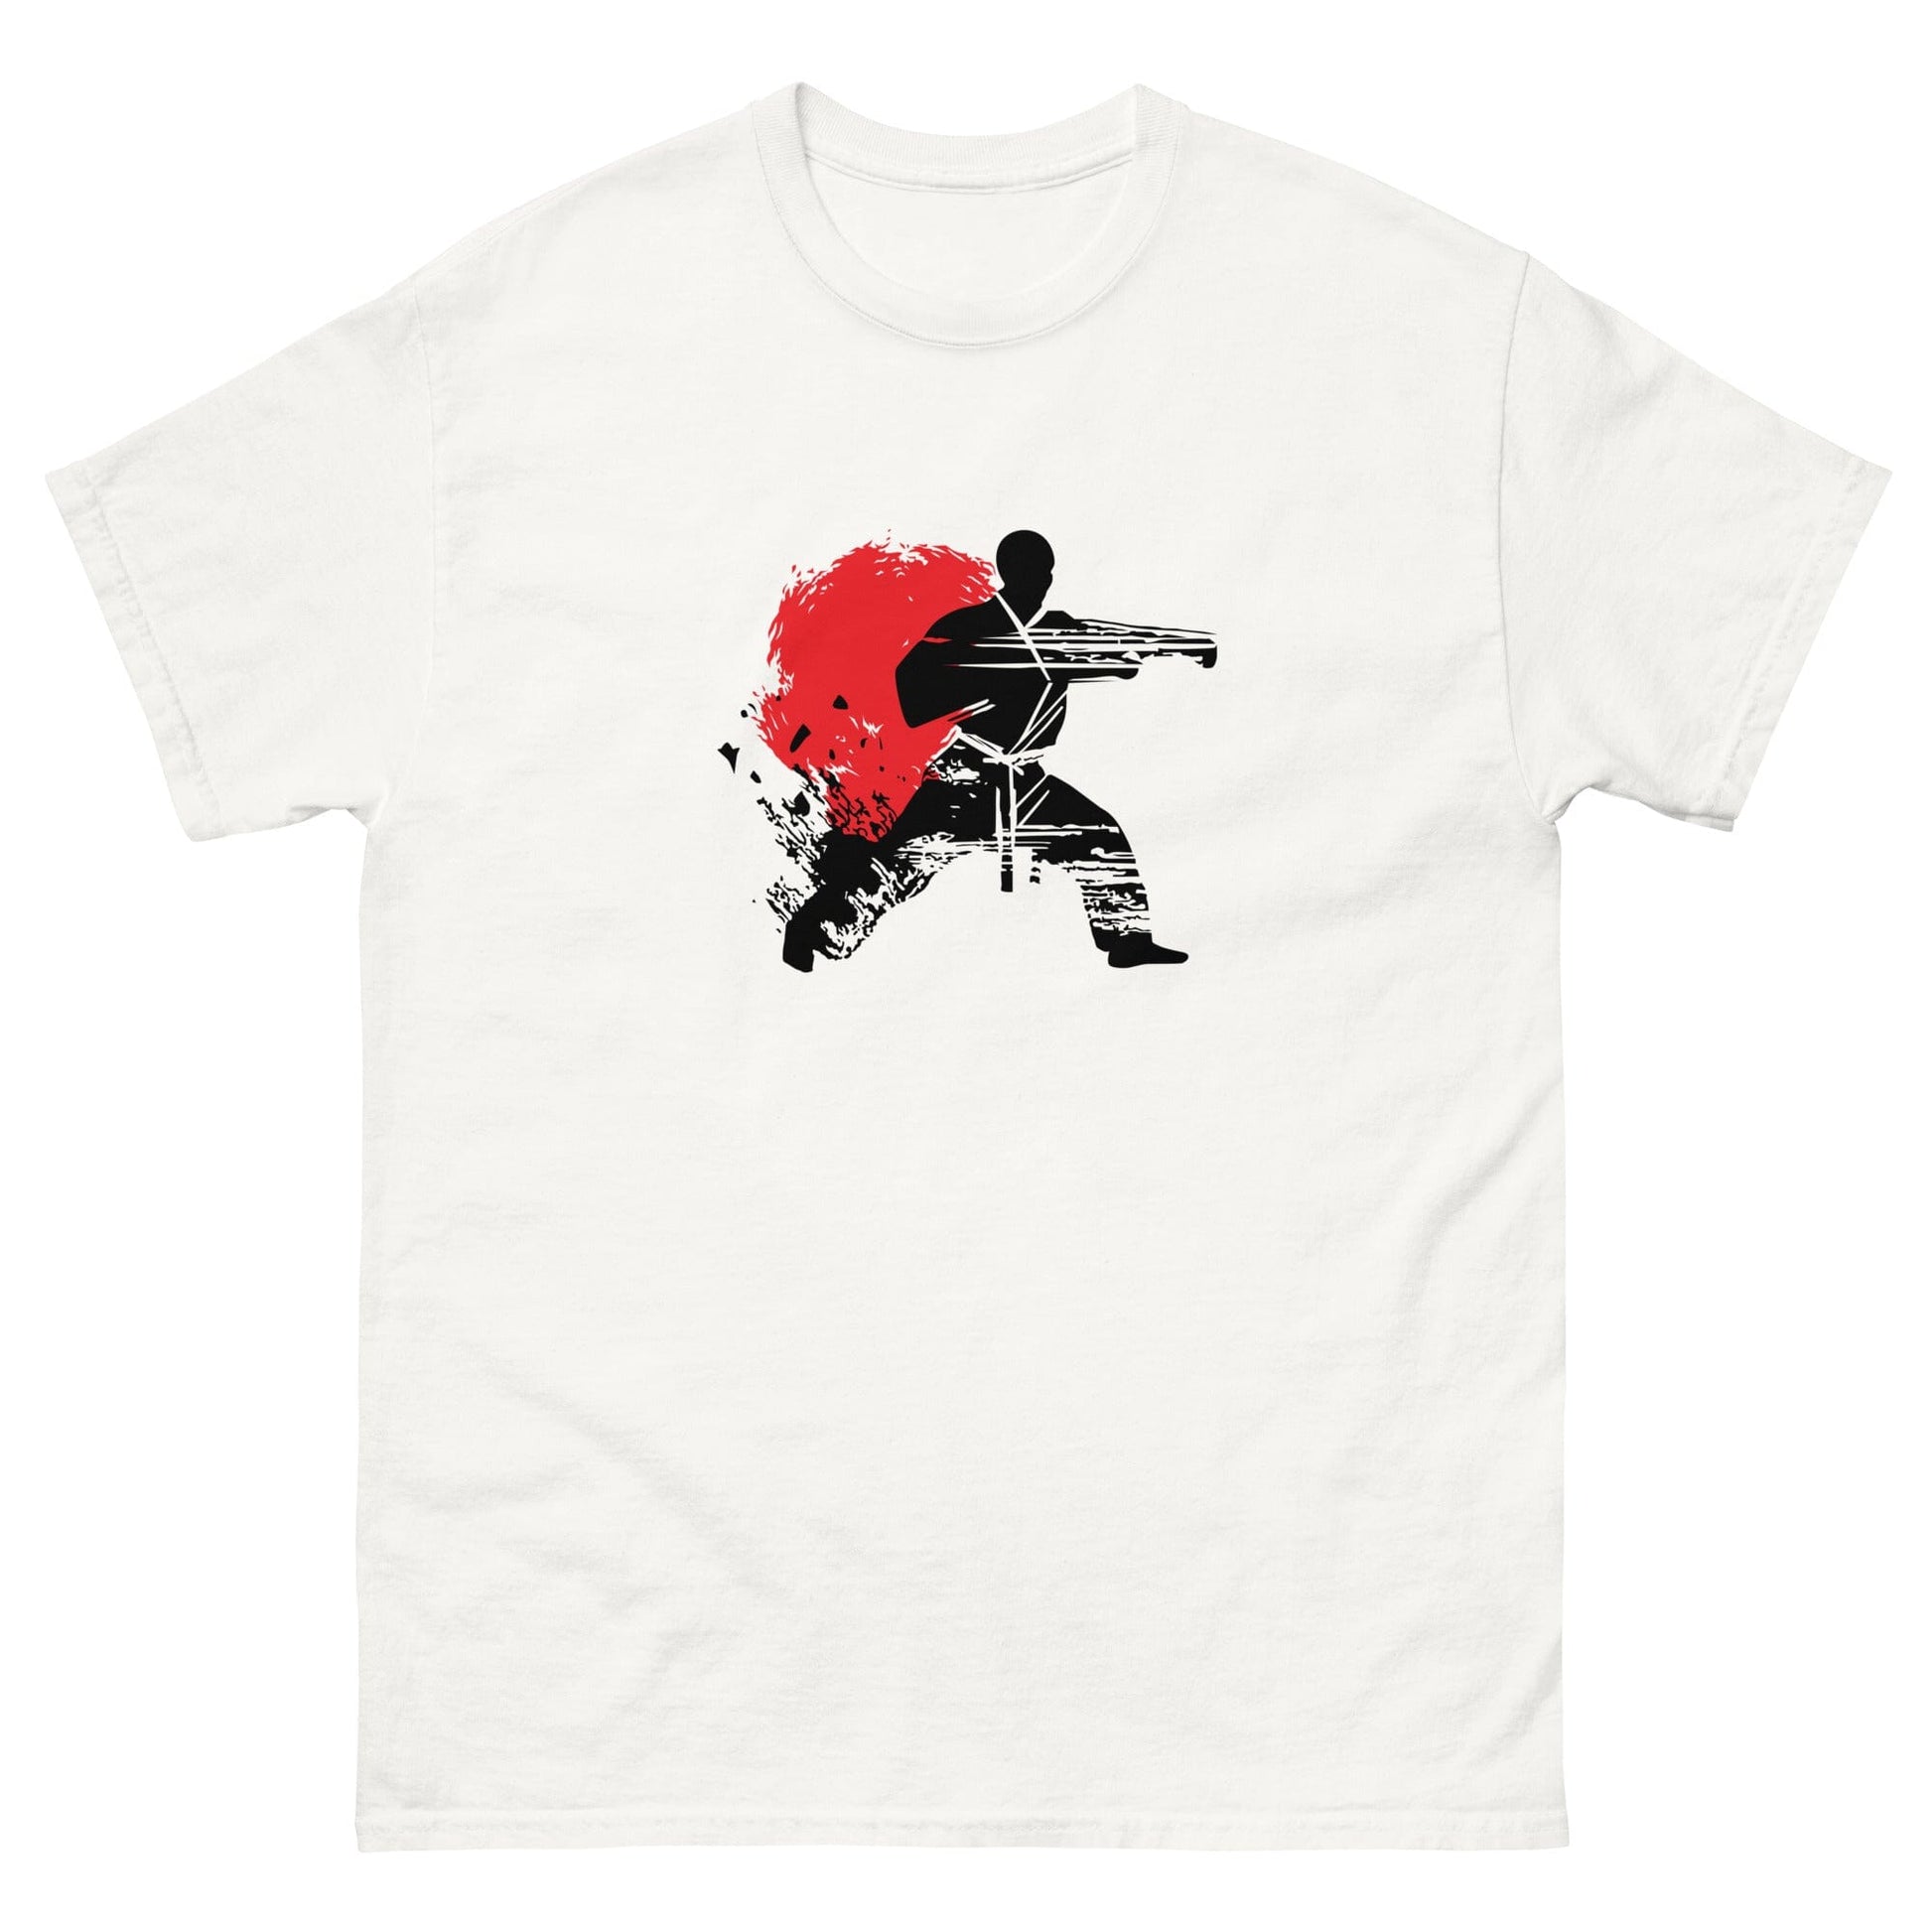 Karate Technique Shirt Martial Arts T-shirts Kenshi Crew White S 